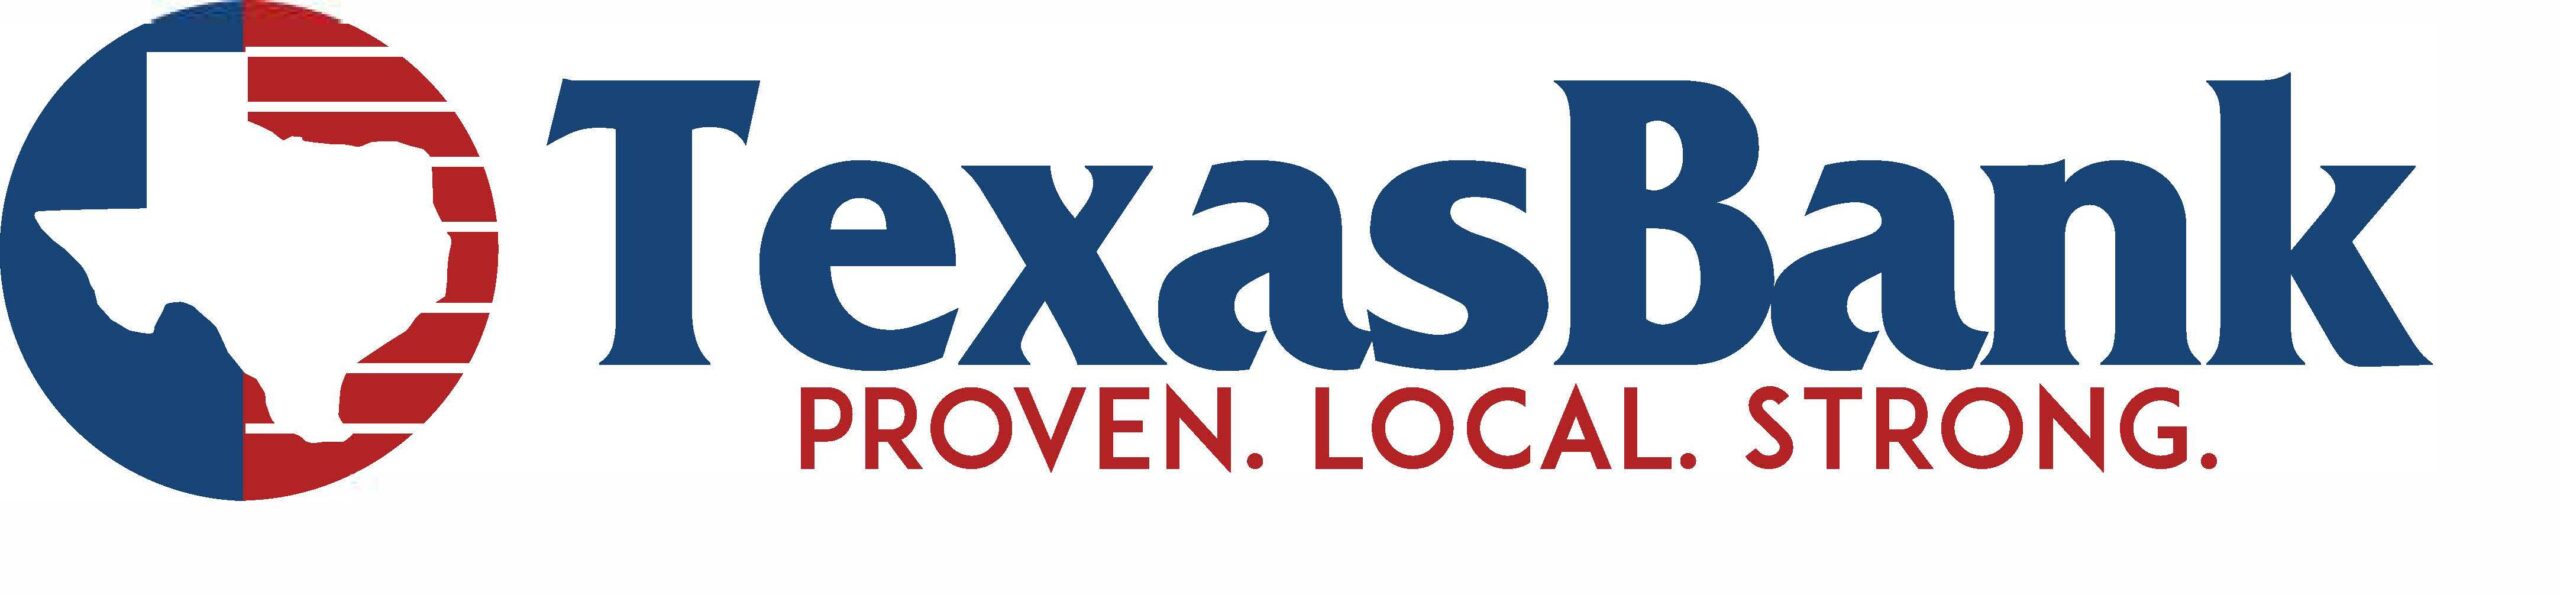 TexasBank-Logo-scaled.jpg